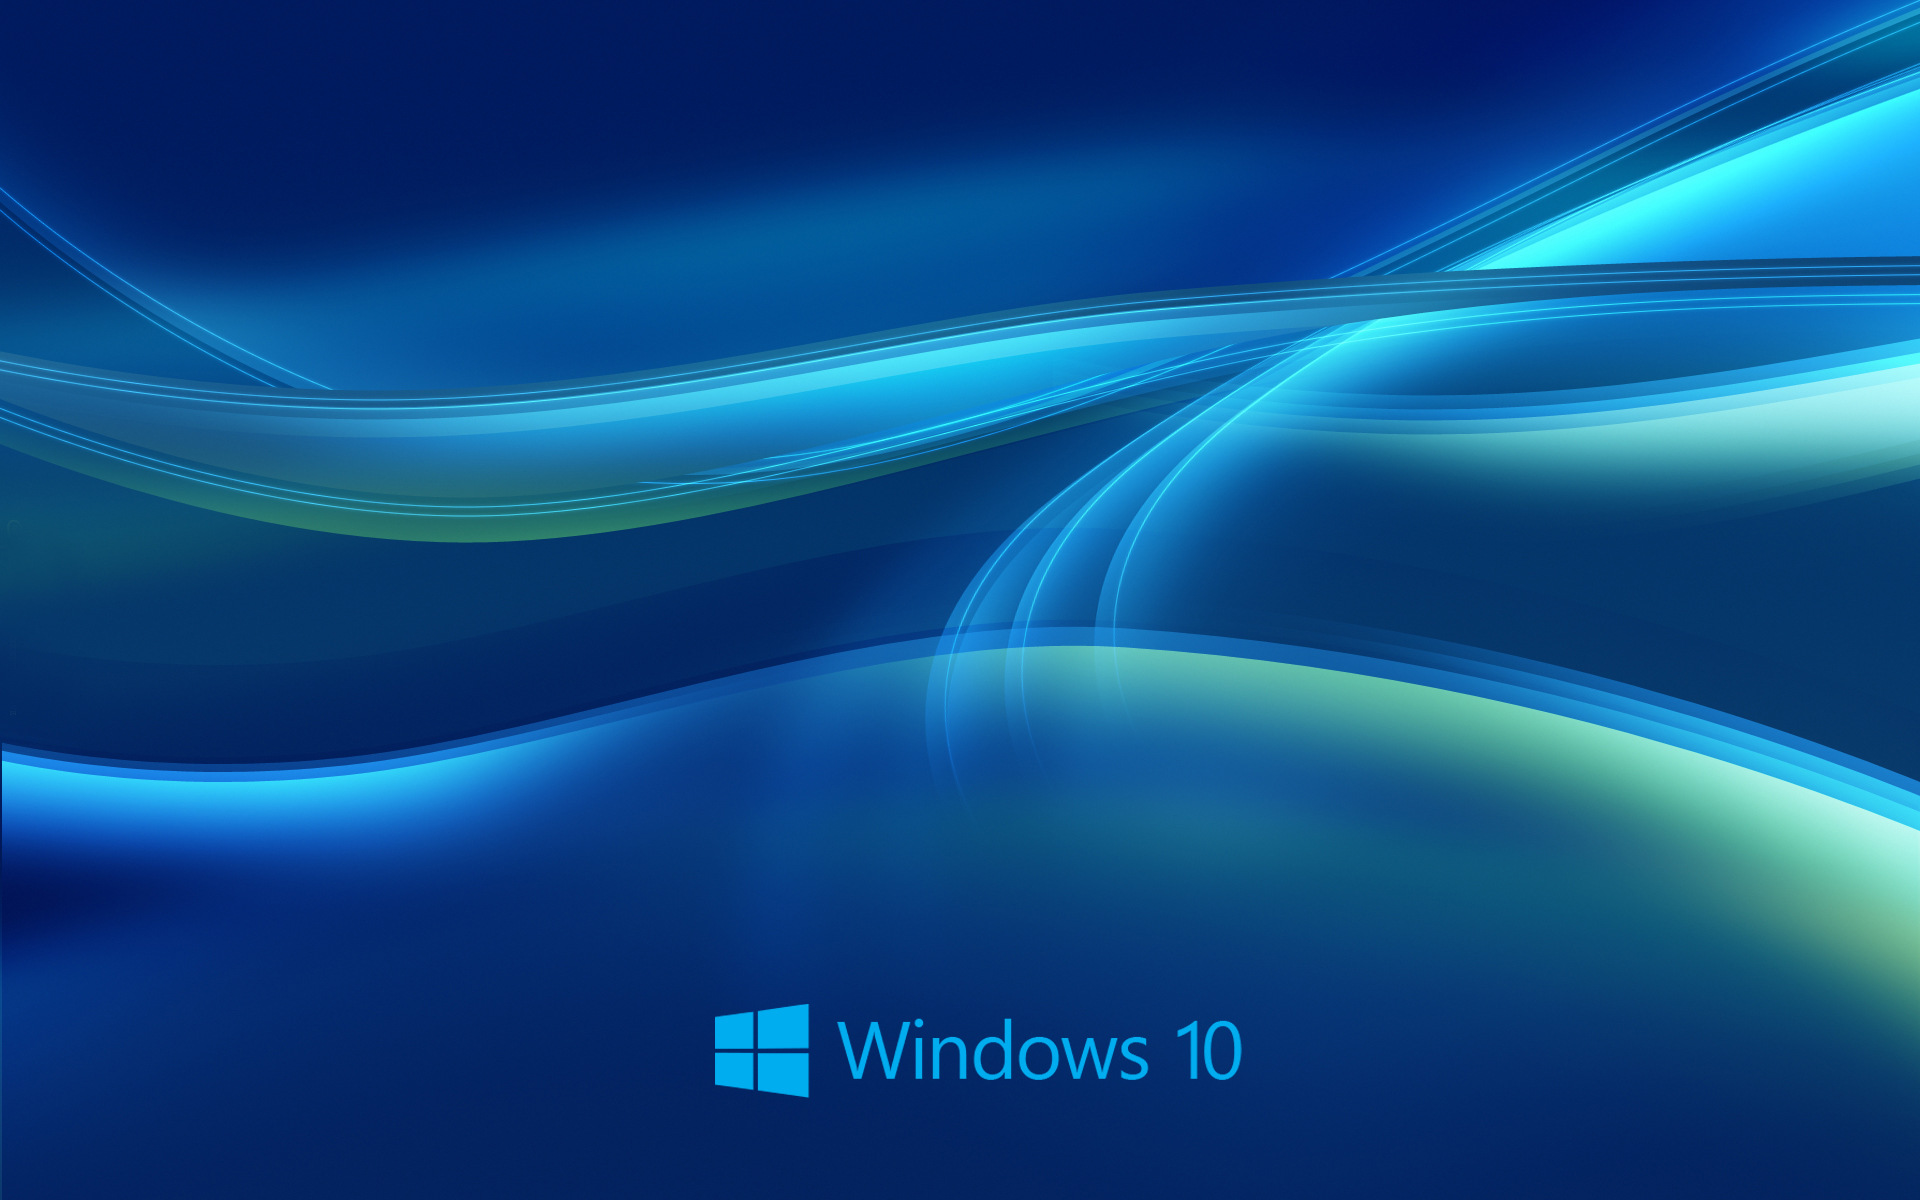 Windows 10 default wallpaper light blue 4k by dpcdpc11